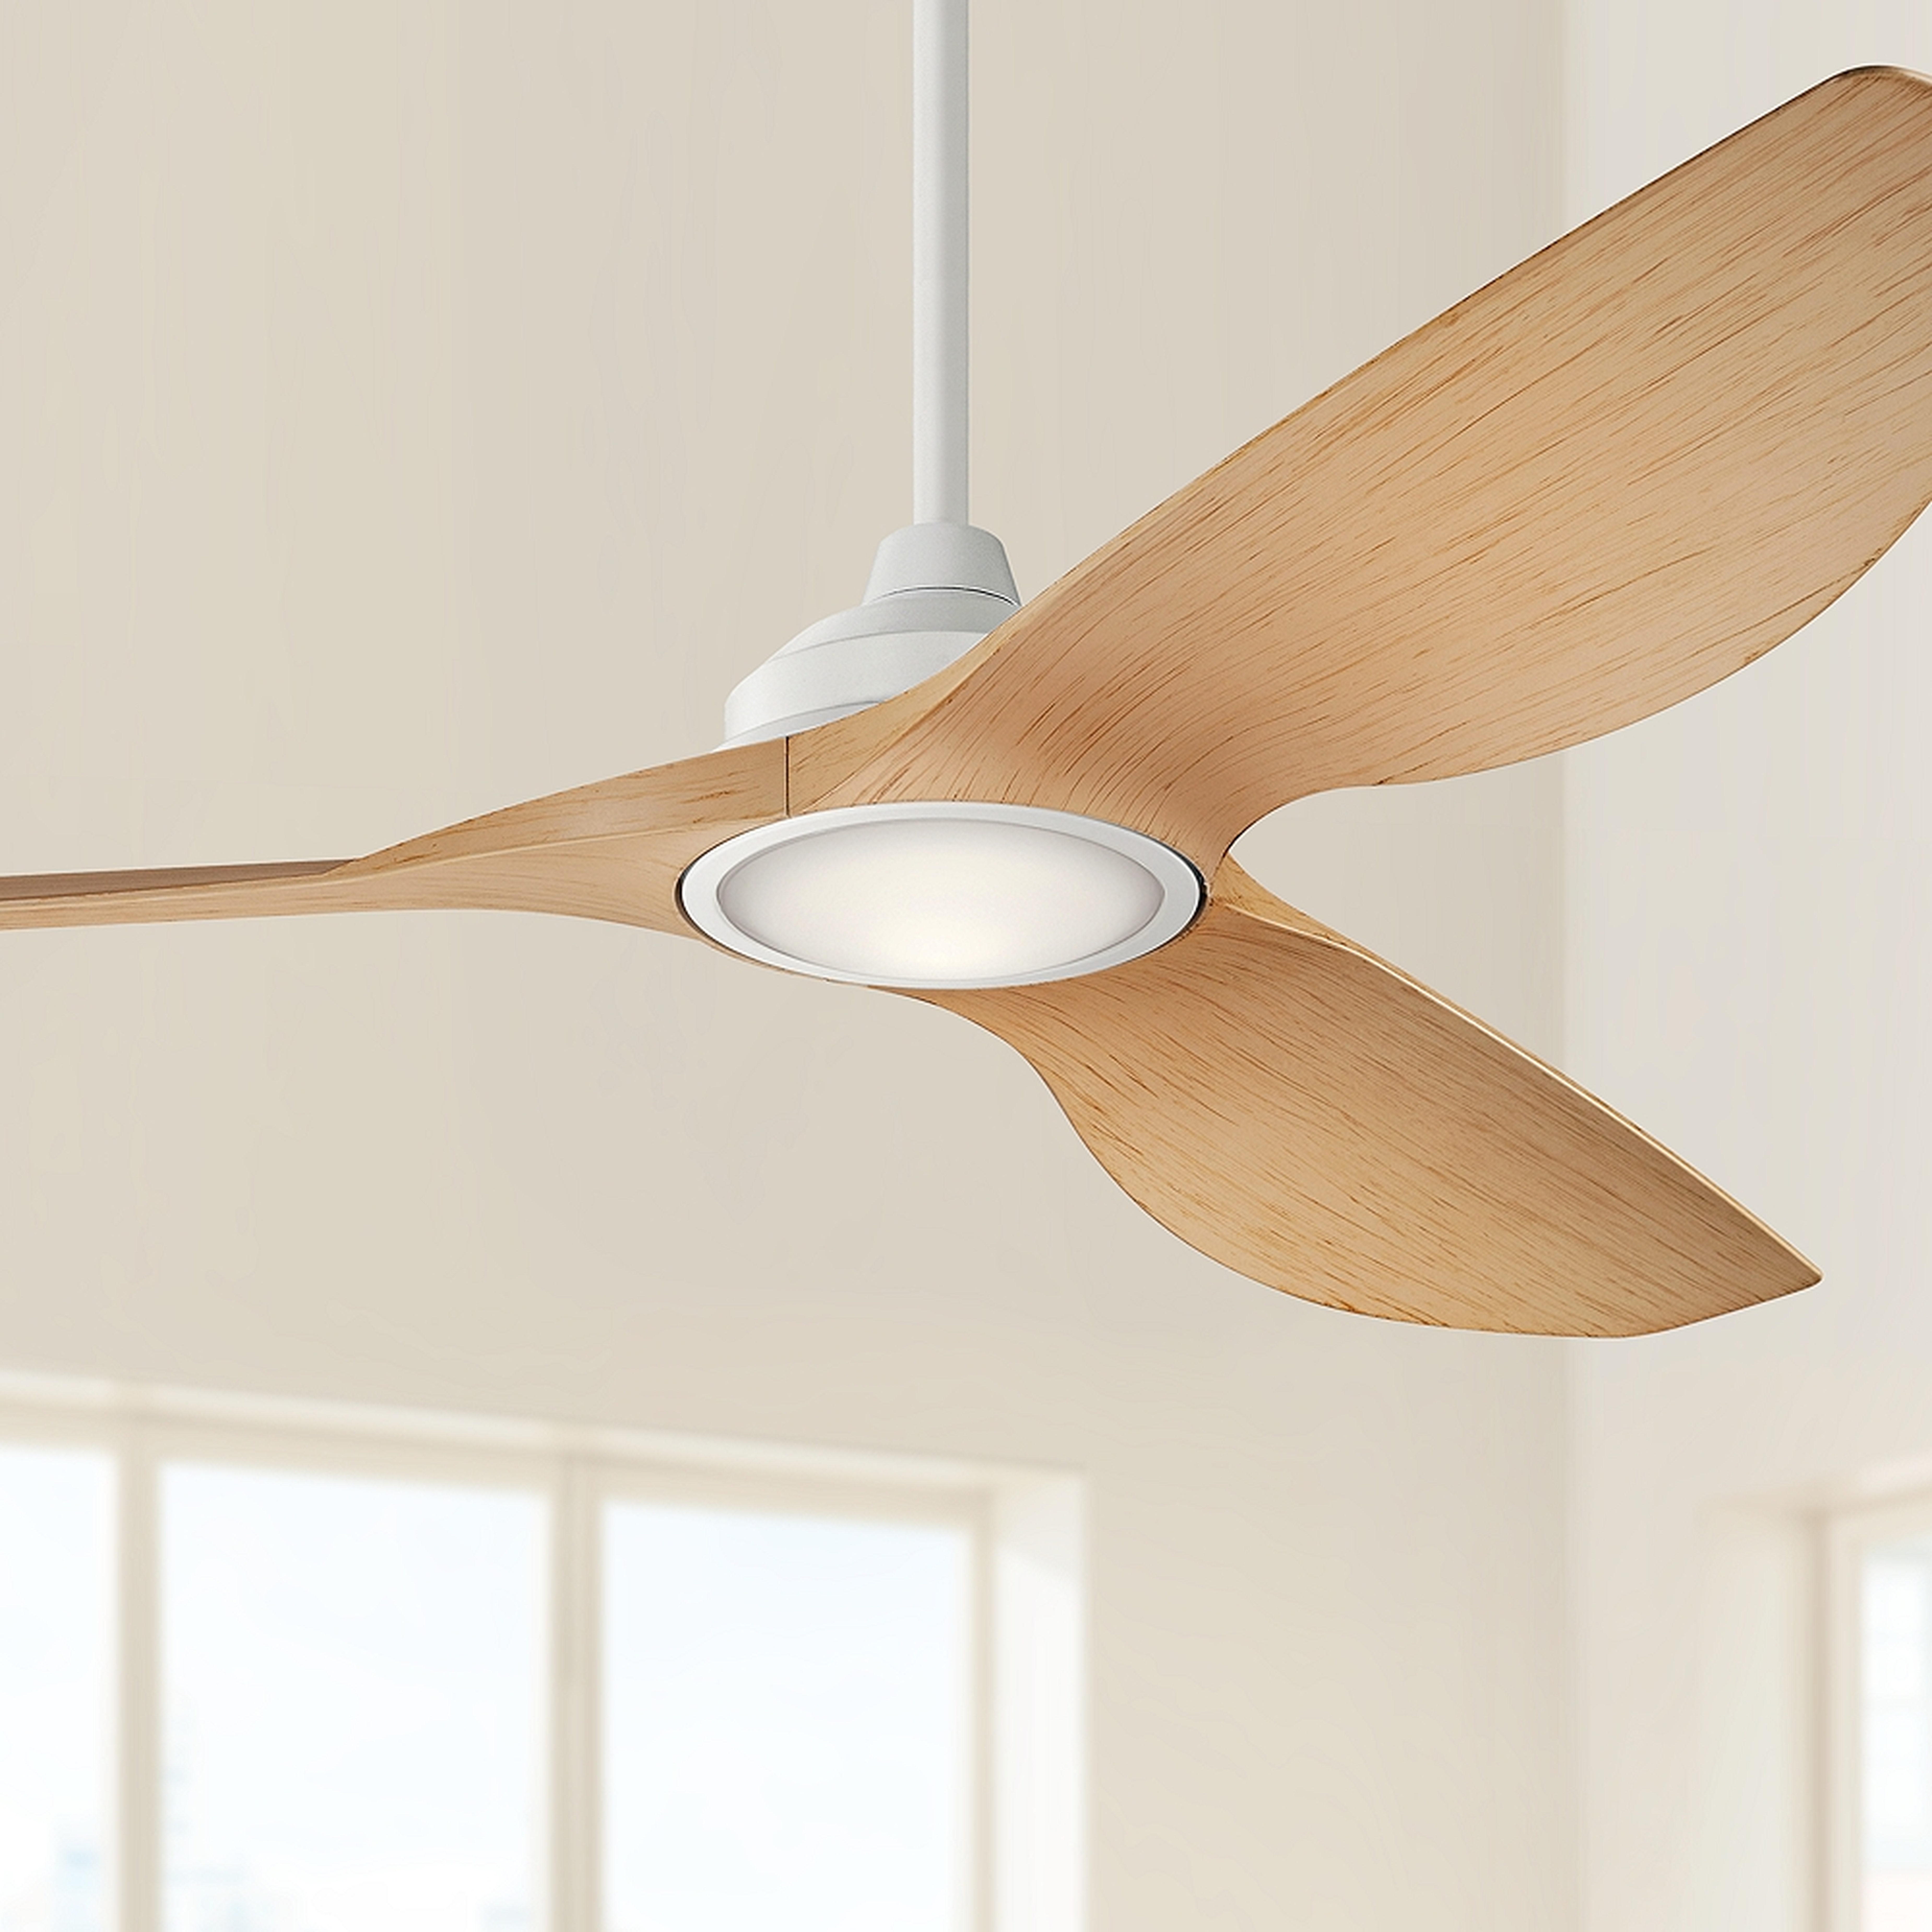 65" Kichler Imari Light Oak and Matte White LED Ceiling Fan - Style # 65D36 - Lamps Plus